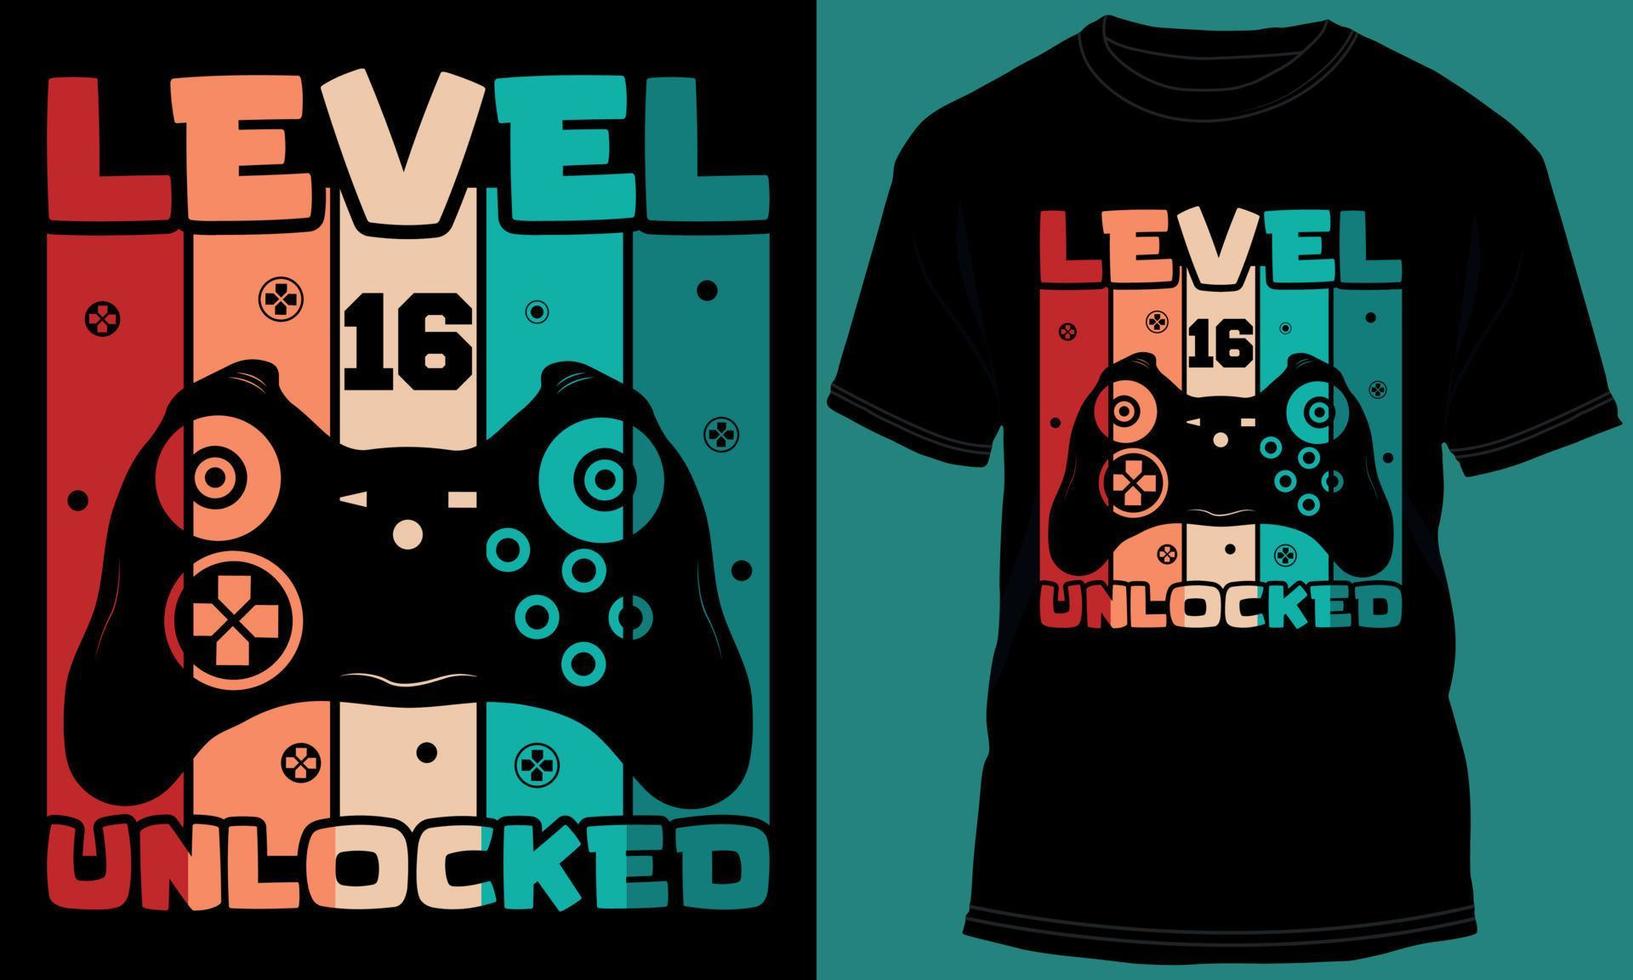 Gamer or Gaming Level 16 Unlocked Tshirt Design vector